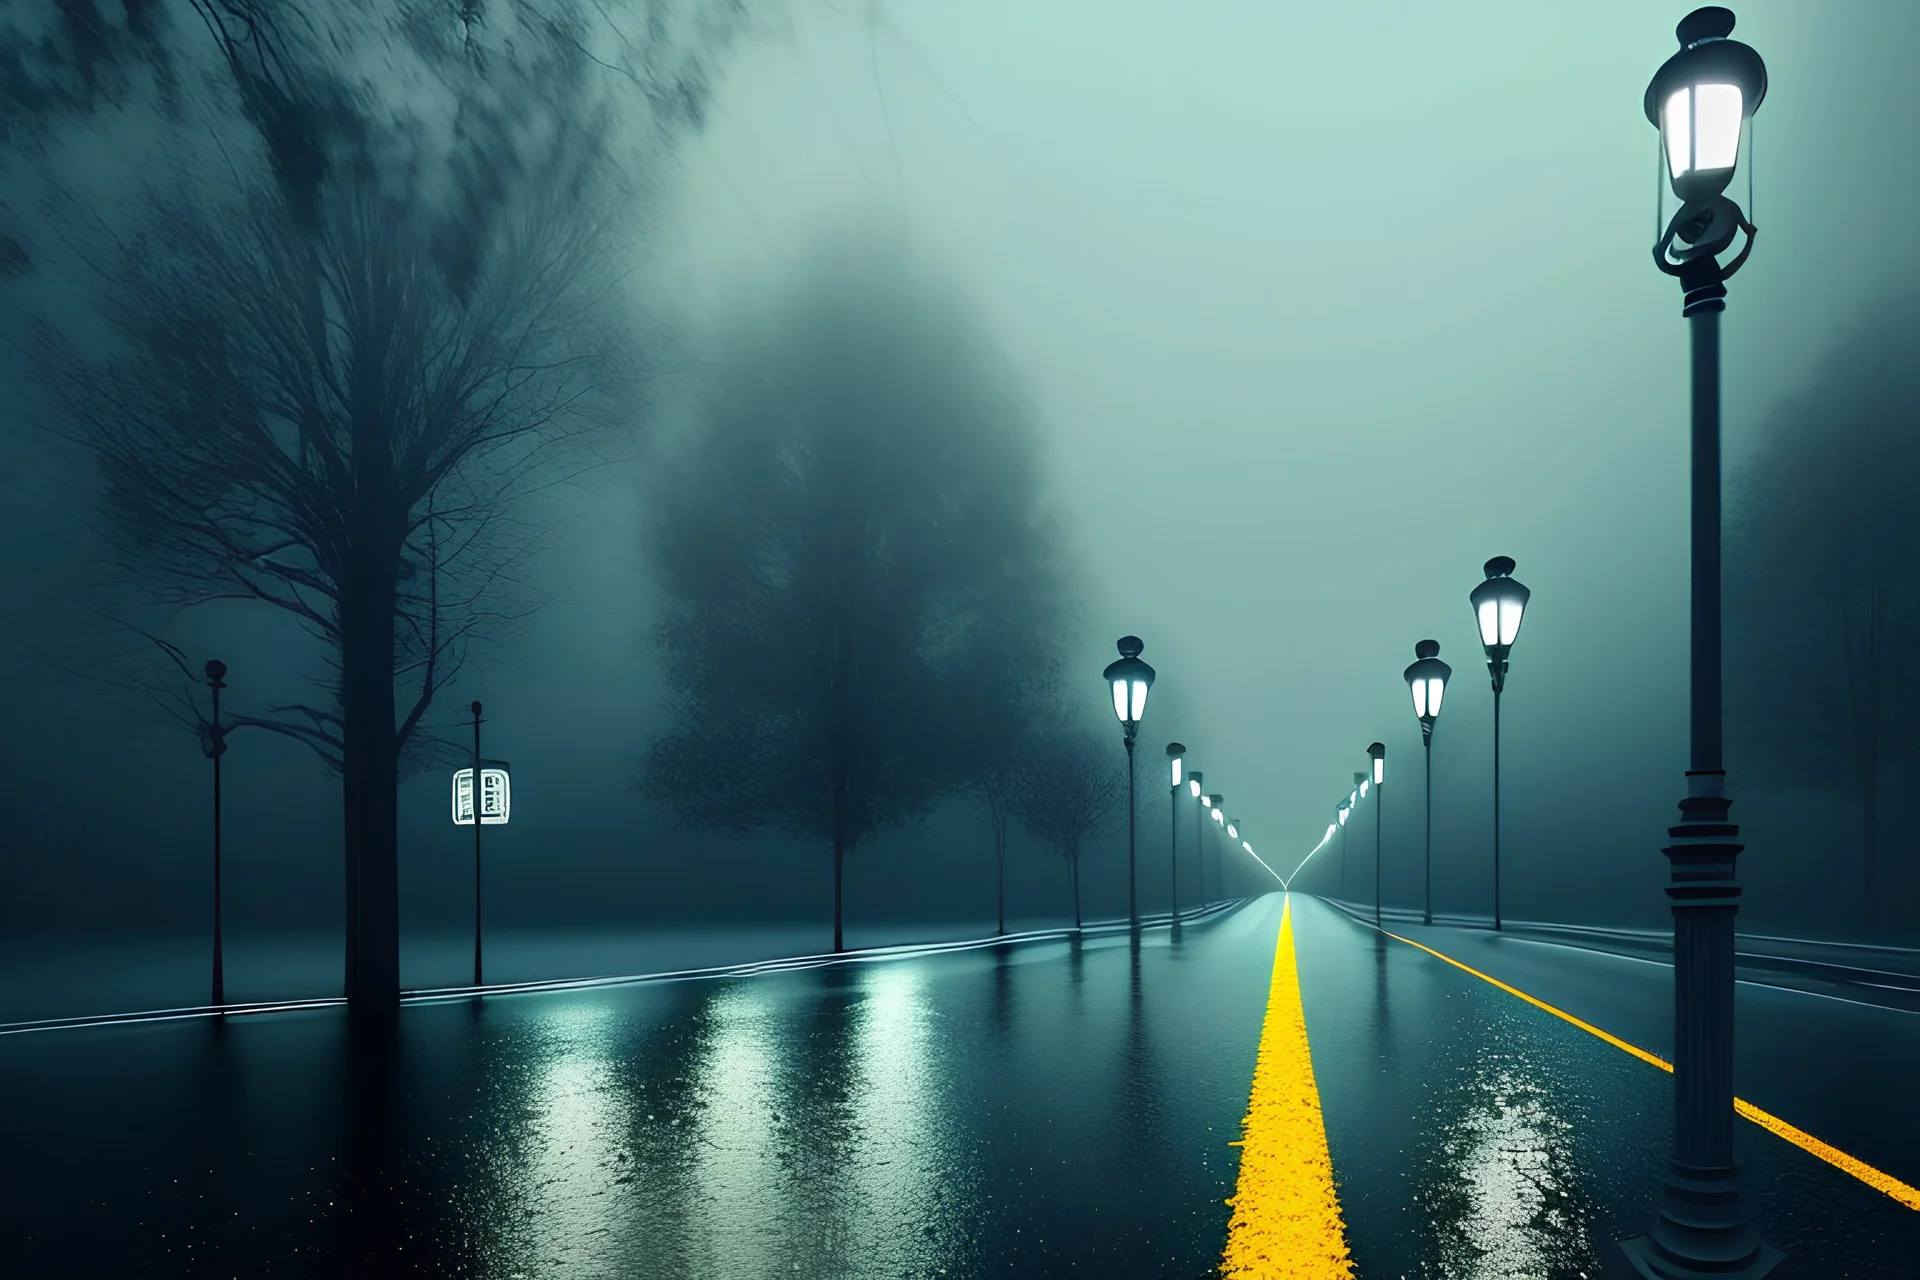 Rainy scenery, night street with dimly lit lamppost, cold color, empty scenery, empty road, rain, night, night,rayn ,rayns